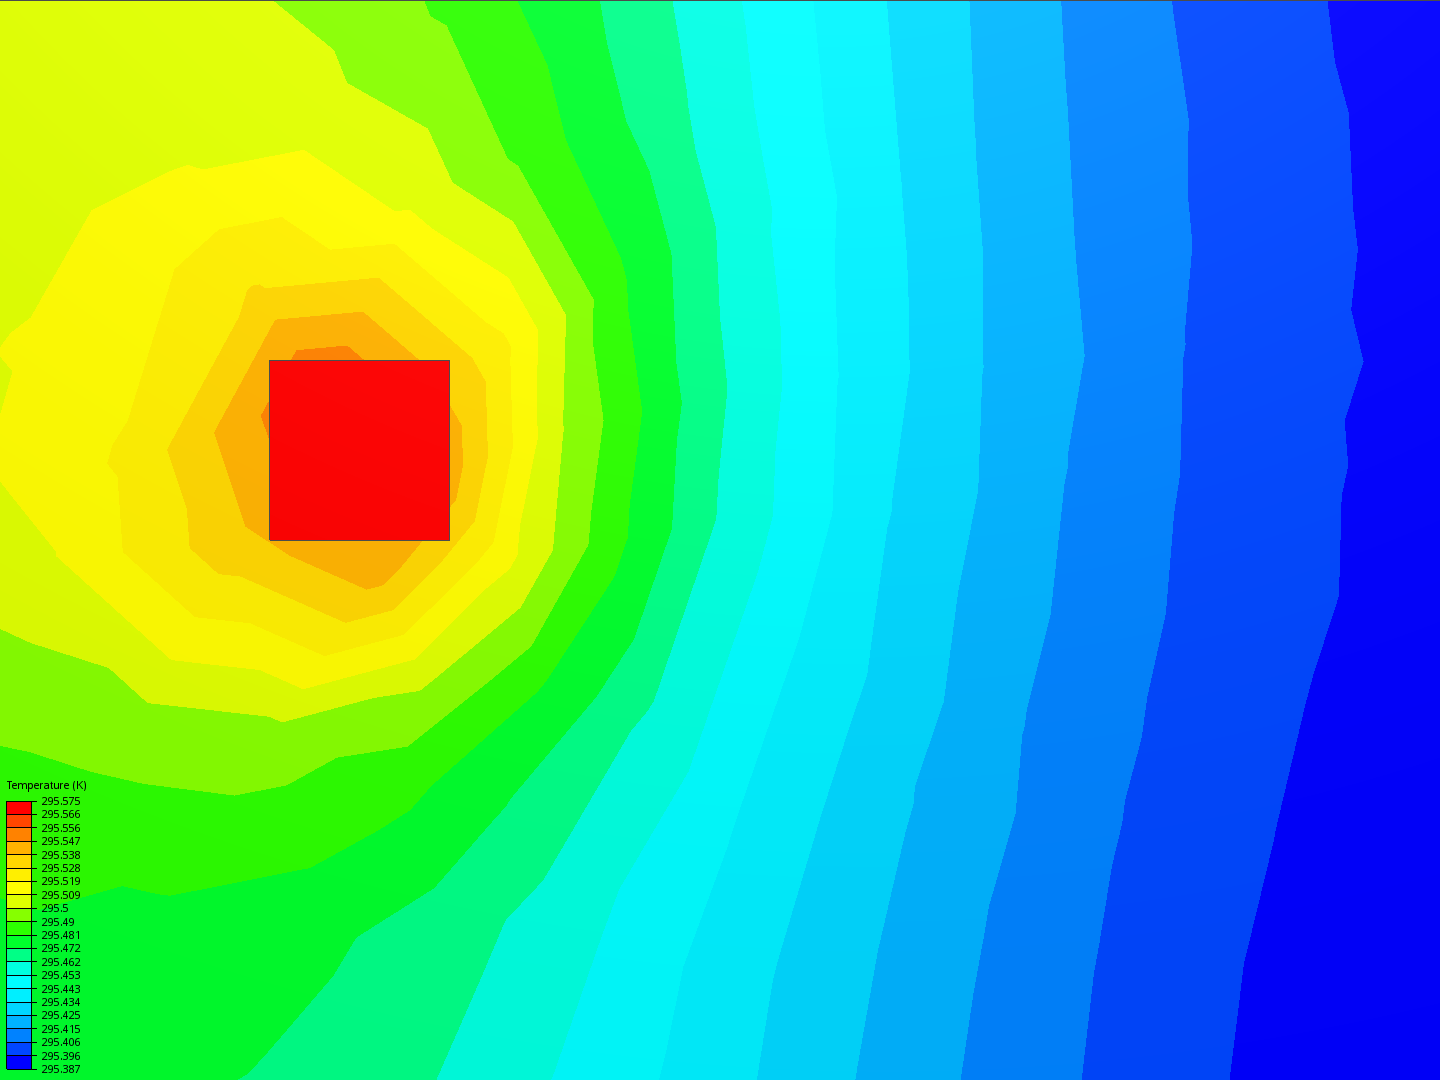 Thermal simulation image